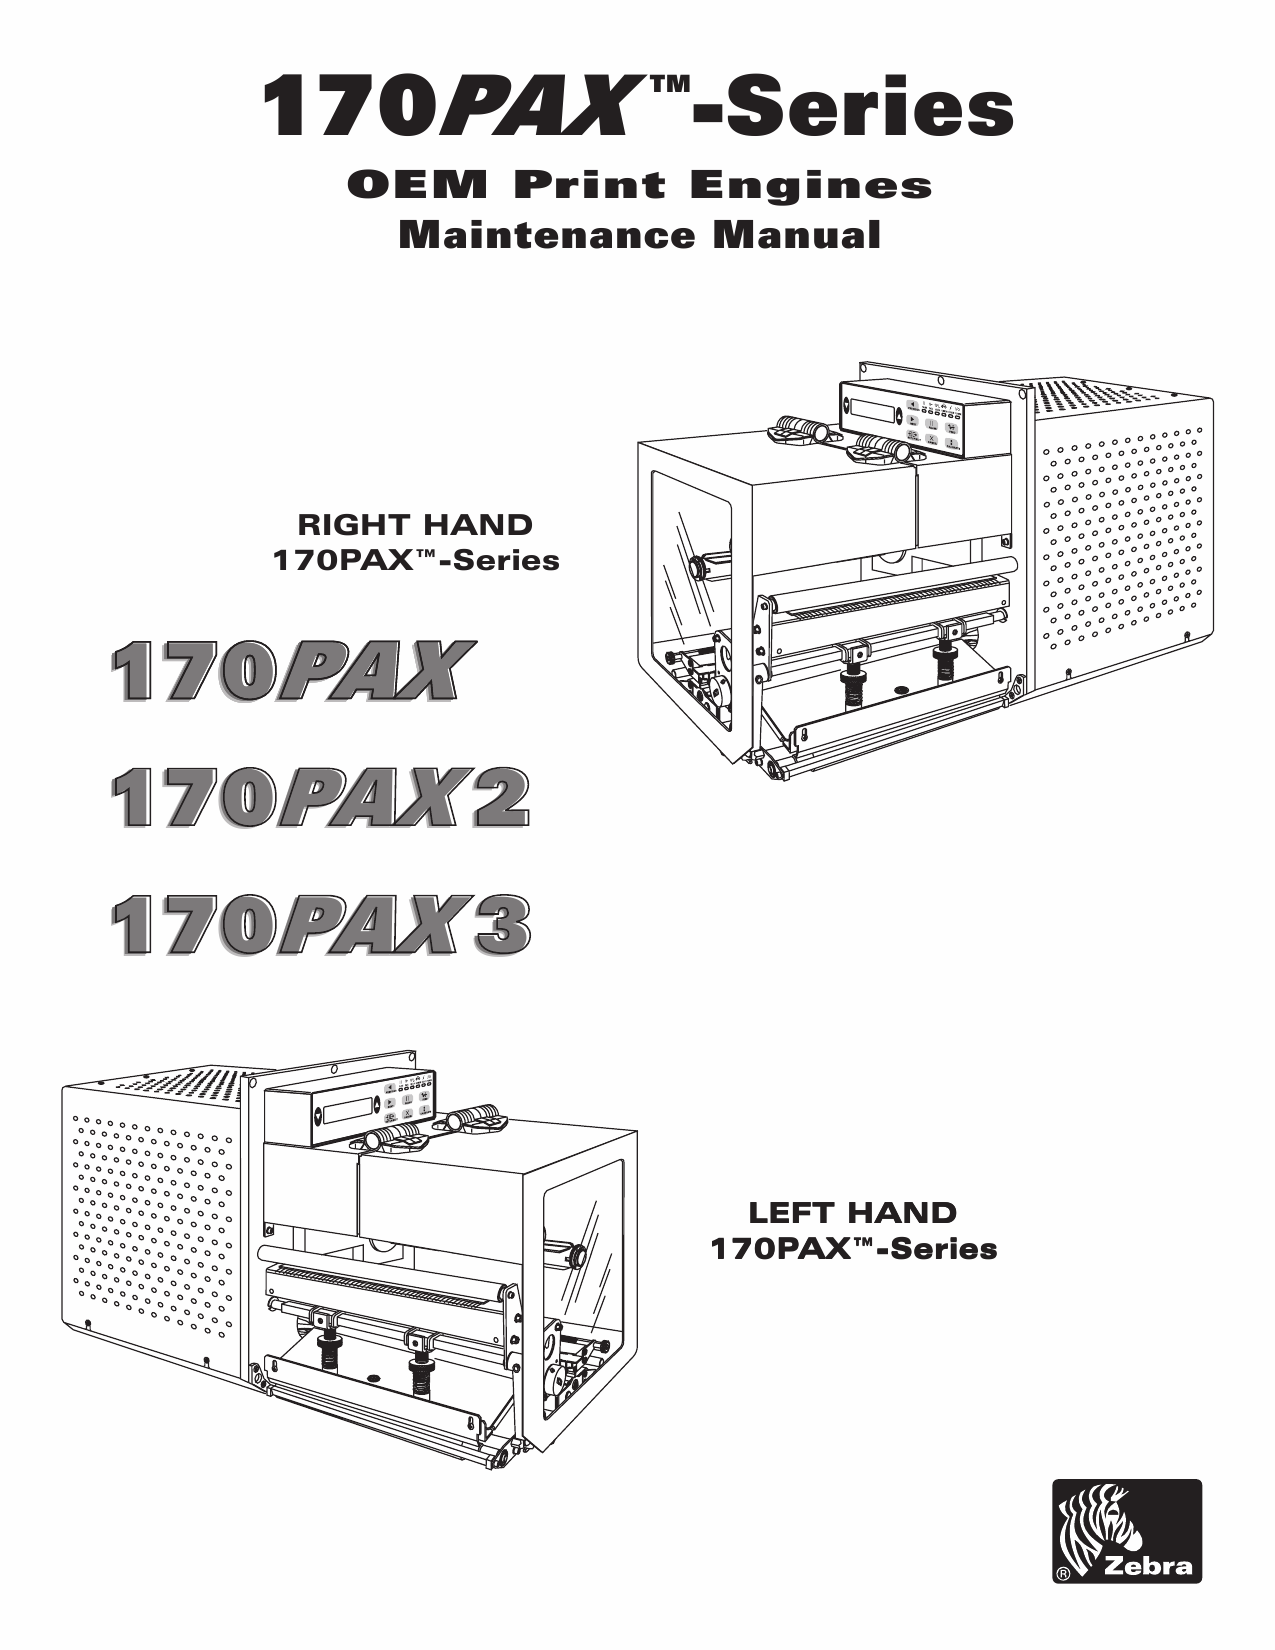 Zebra Label 170PAX 170PAX2 170PAX3 Maintenance Service Manual-1